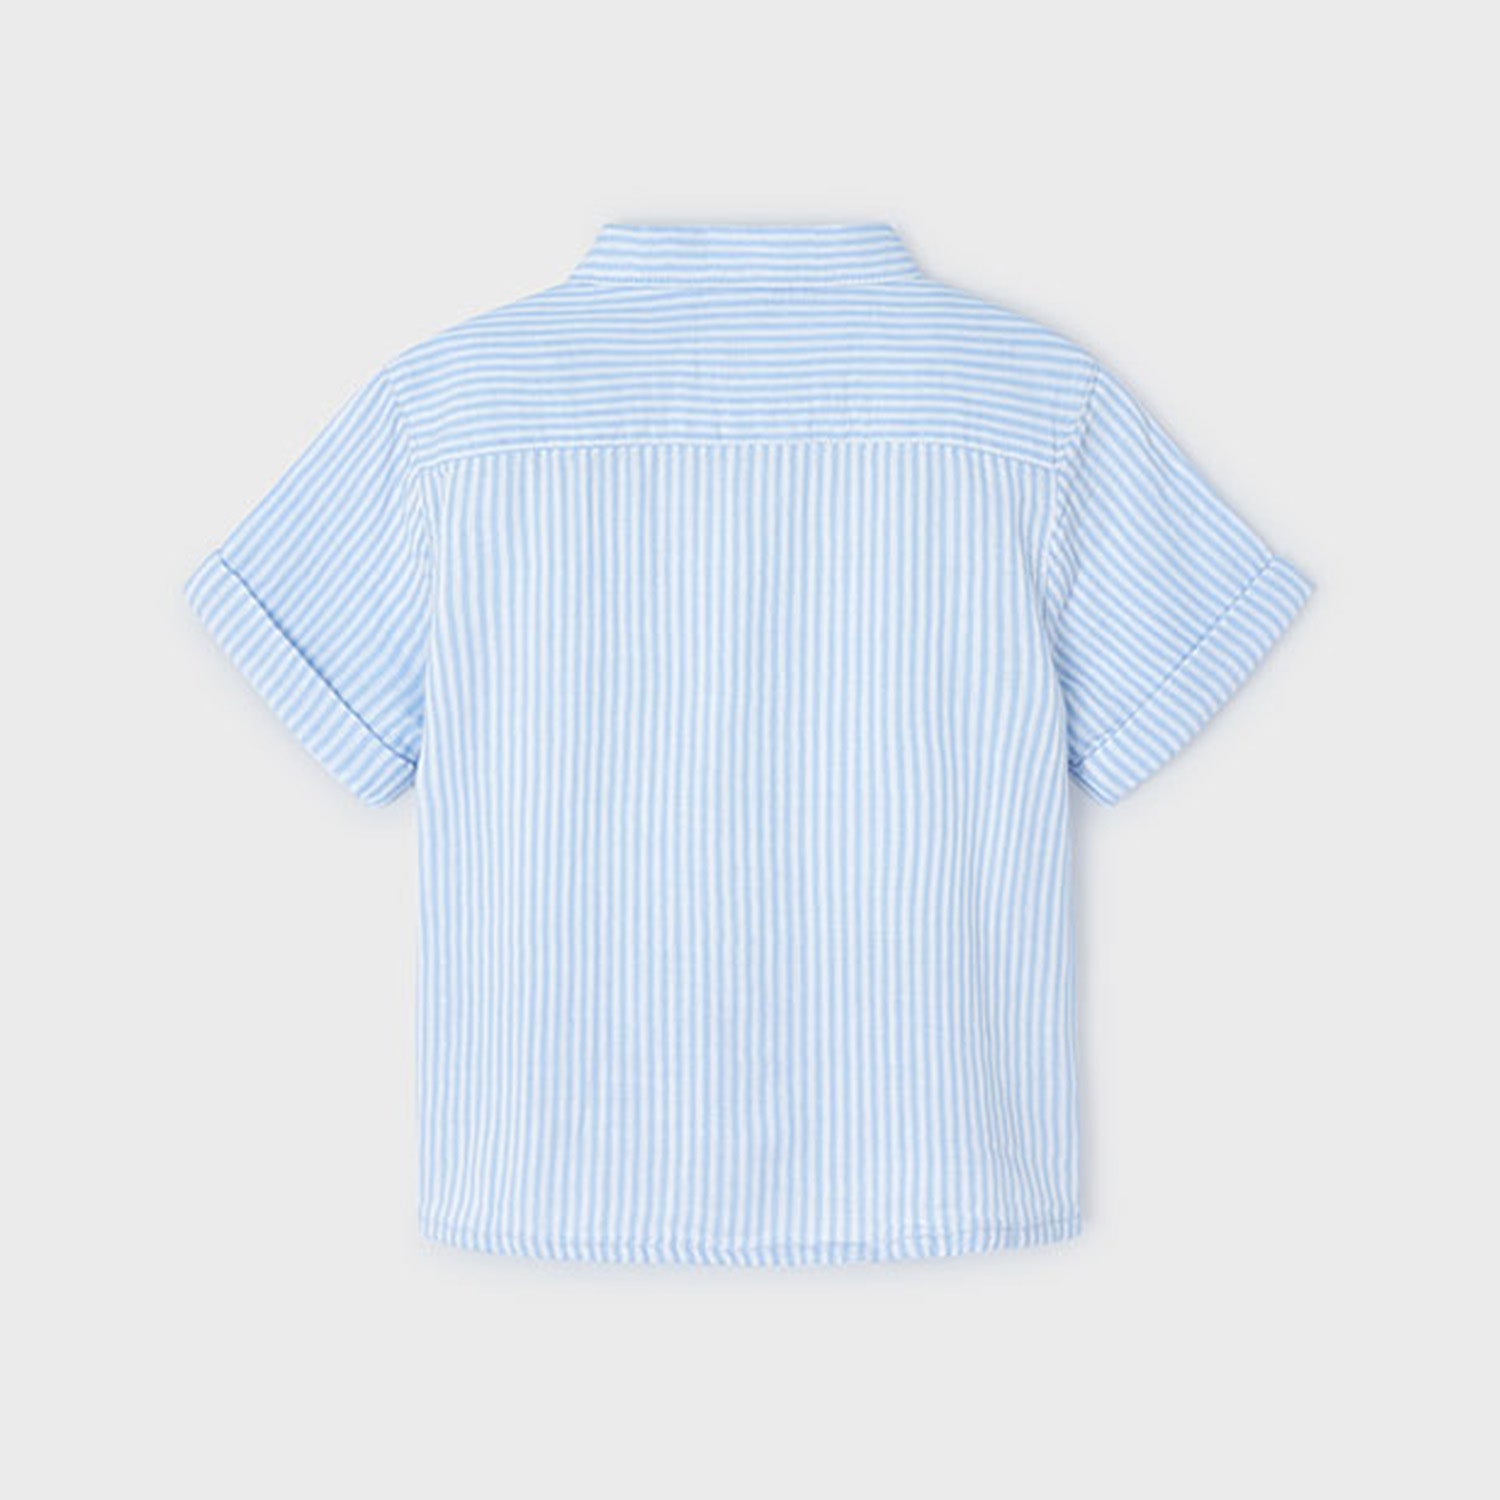 Bue Stripe Shirt